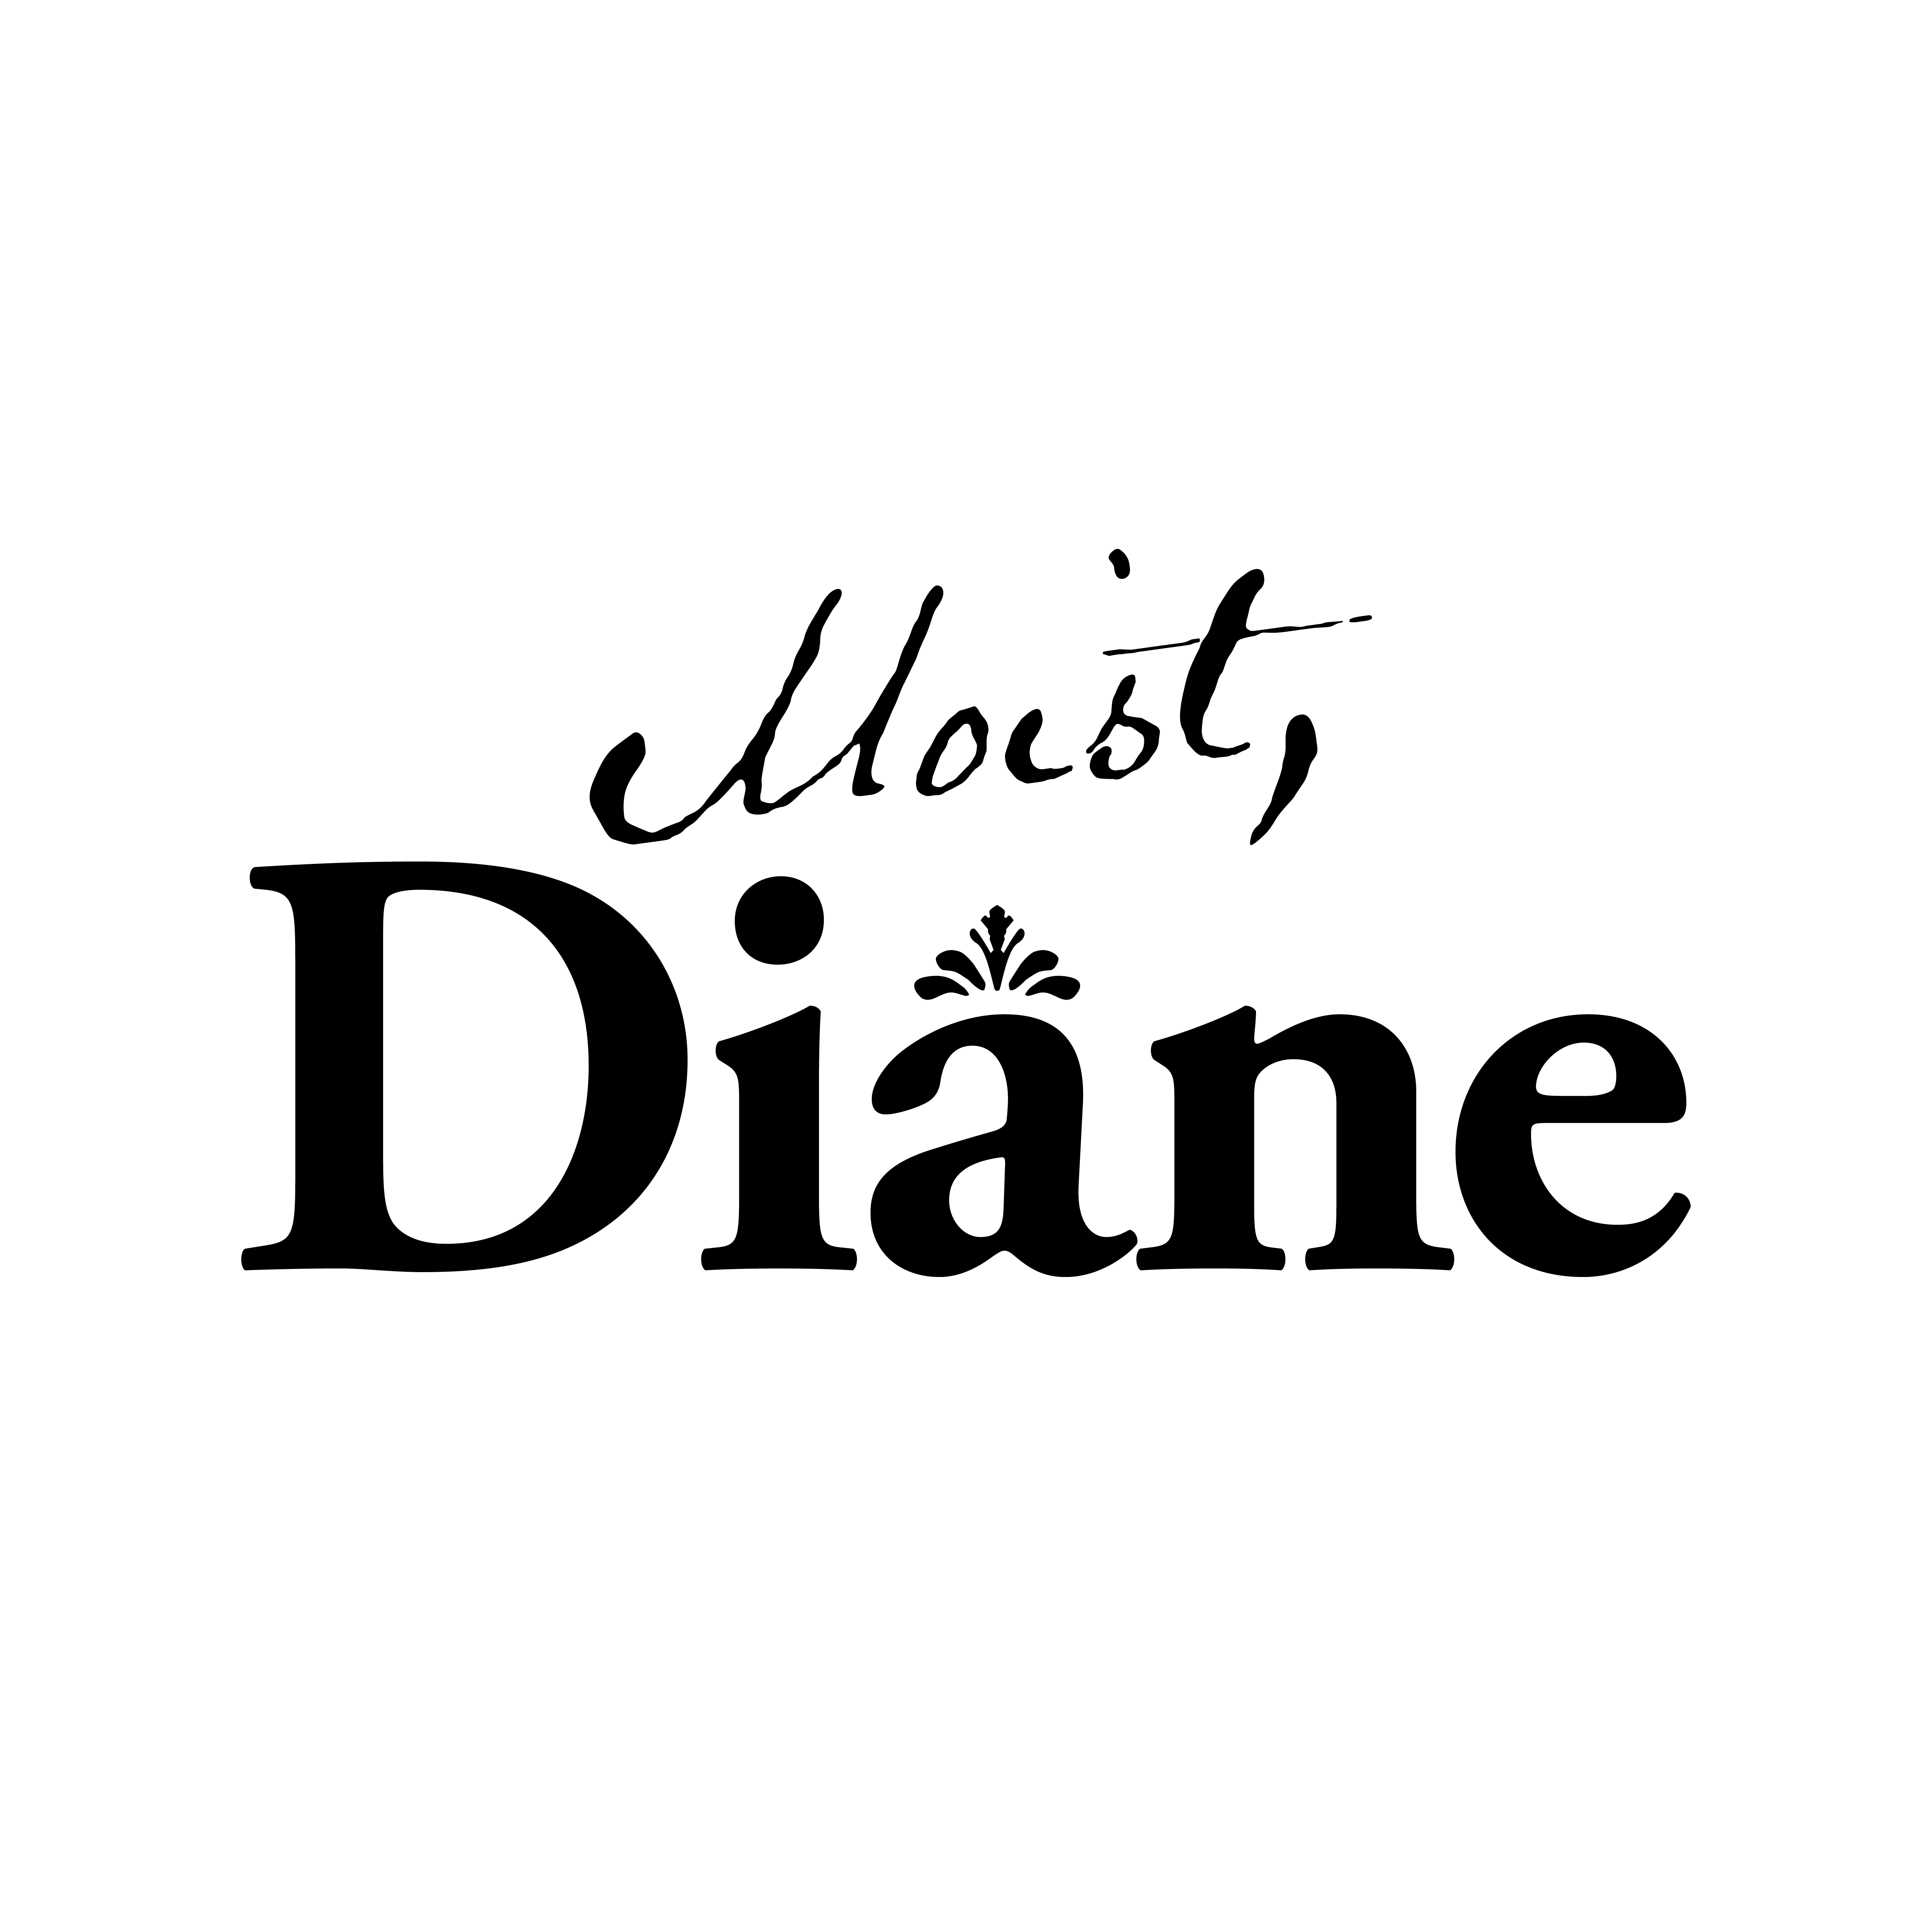 Diane Logo - Moist Diane